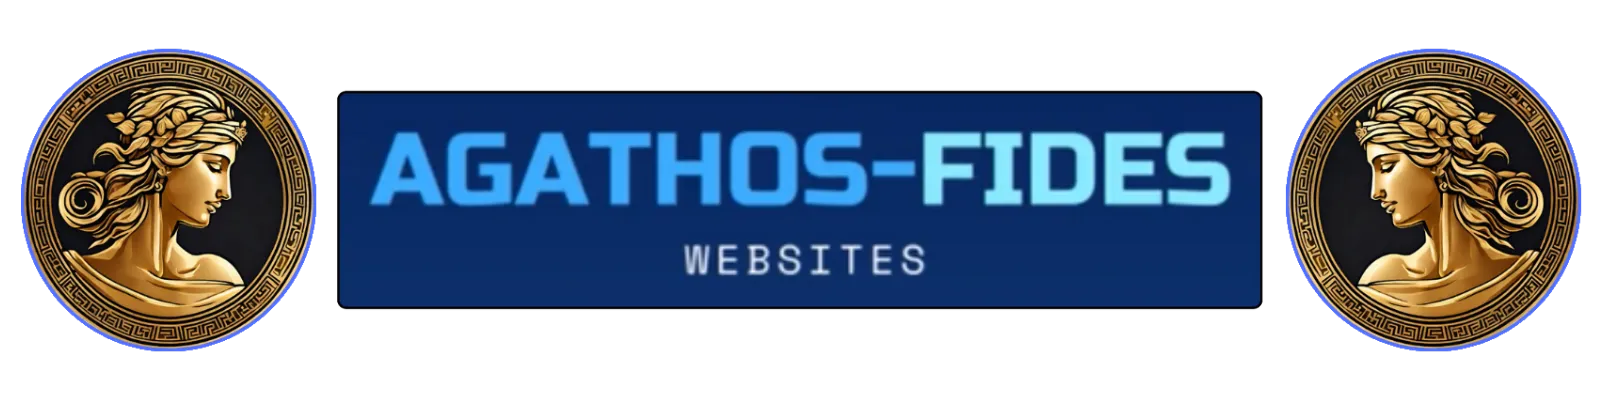 agathos-fides website design goddess header 